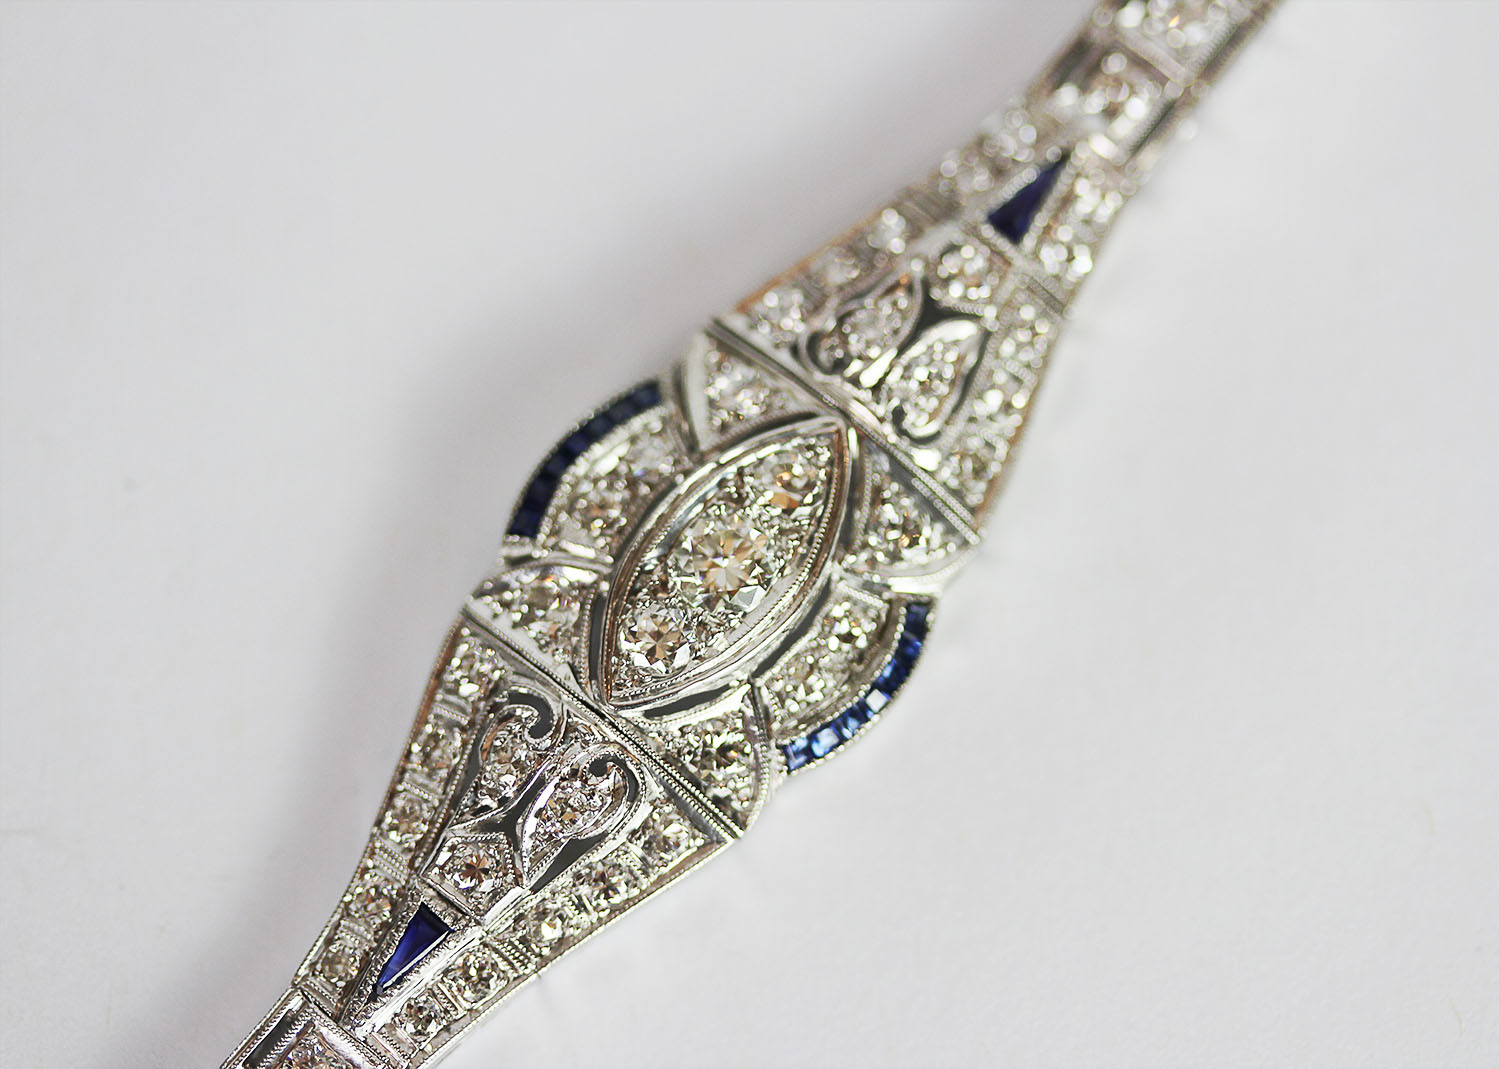 Sapphire and Diamond bracelet, set with 14 baguette cut sapphires and 2 trillion cut sapphires, - Image 2 of 5